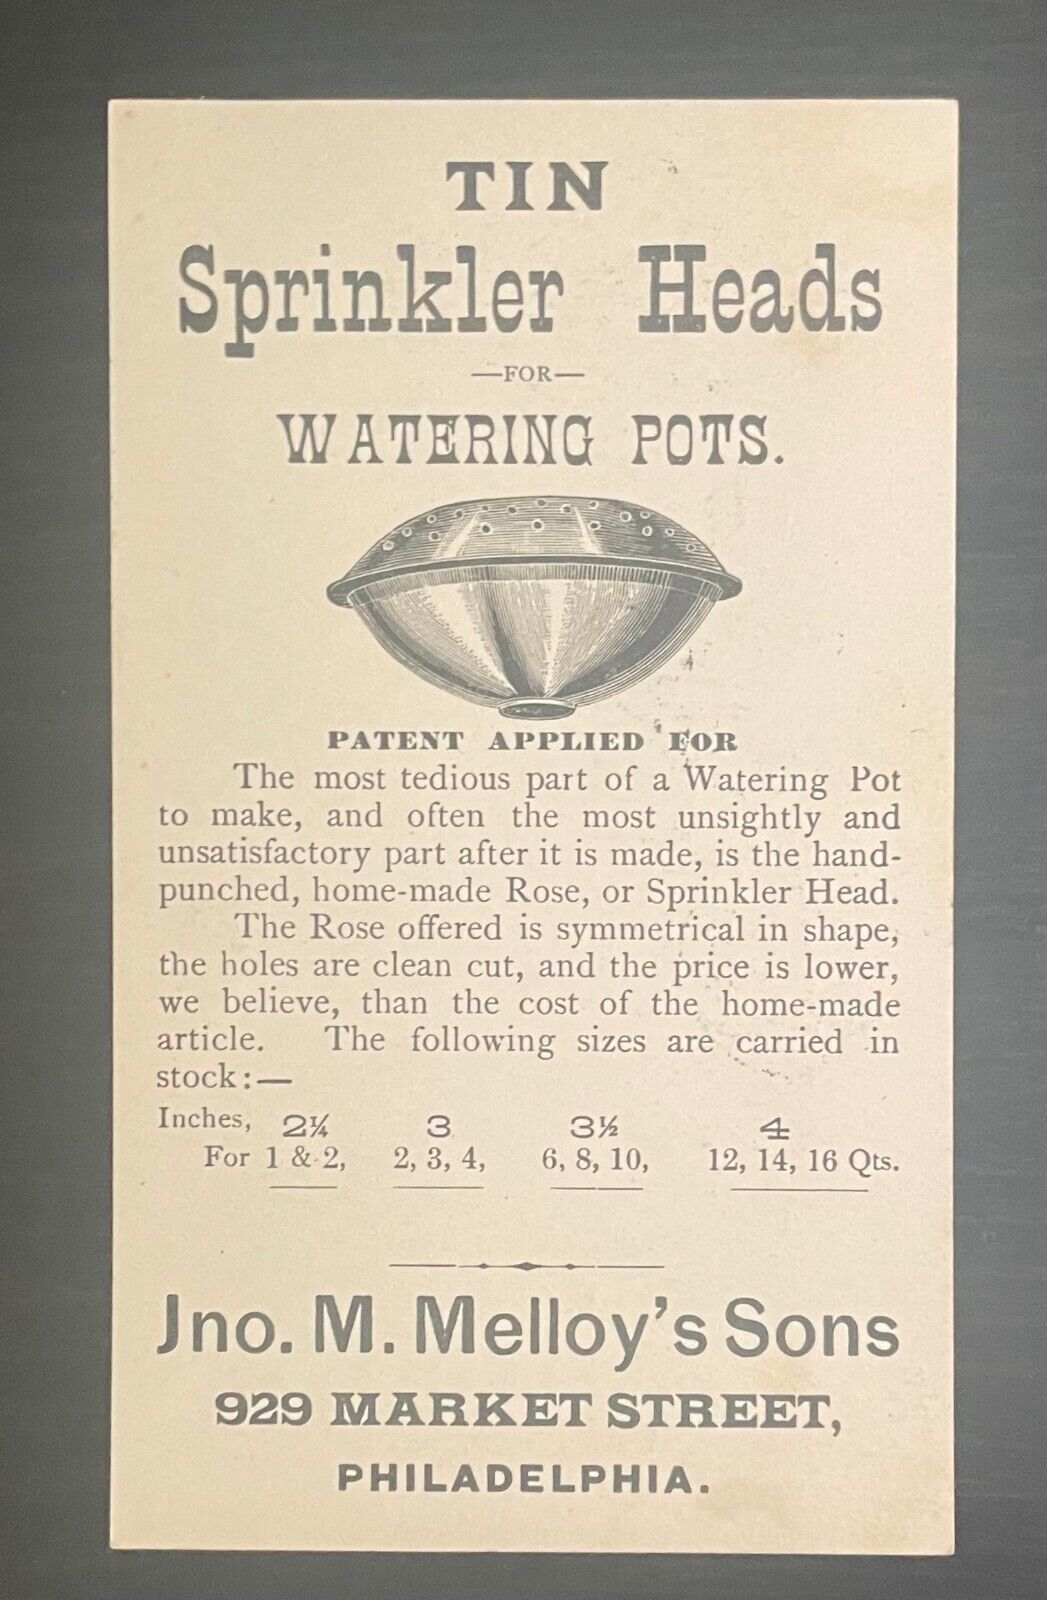 JNO. M. MELLLOY\'S SONS TIN SPRINKLER HEADS PHILADELPHIA PA. - 1898 POSTCARD